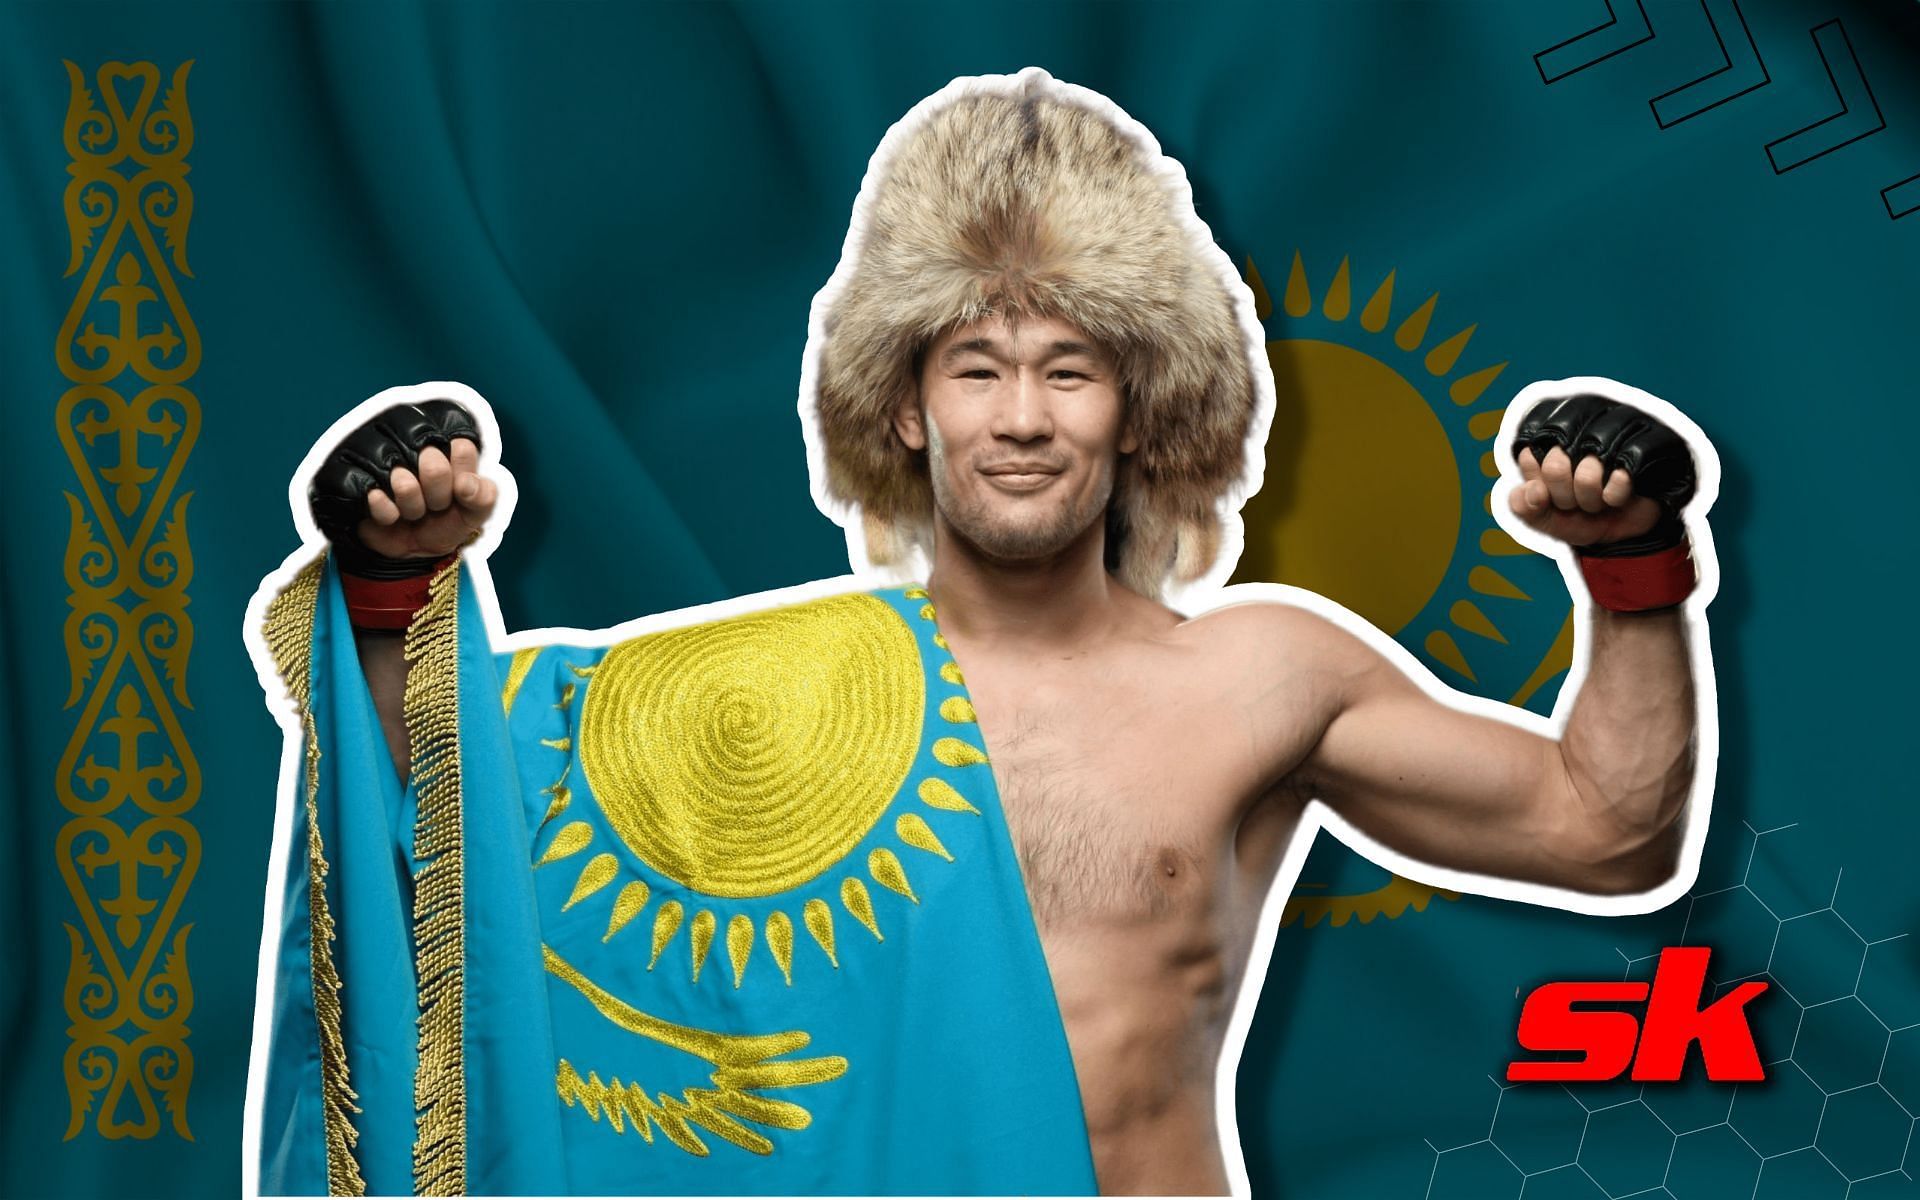 Shavkat Rakhmonov poses with the flag of Kazakhstan. [Image credits: Getty Images]